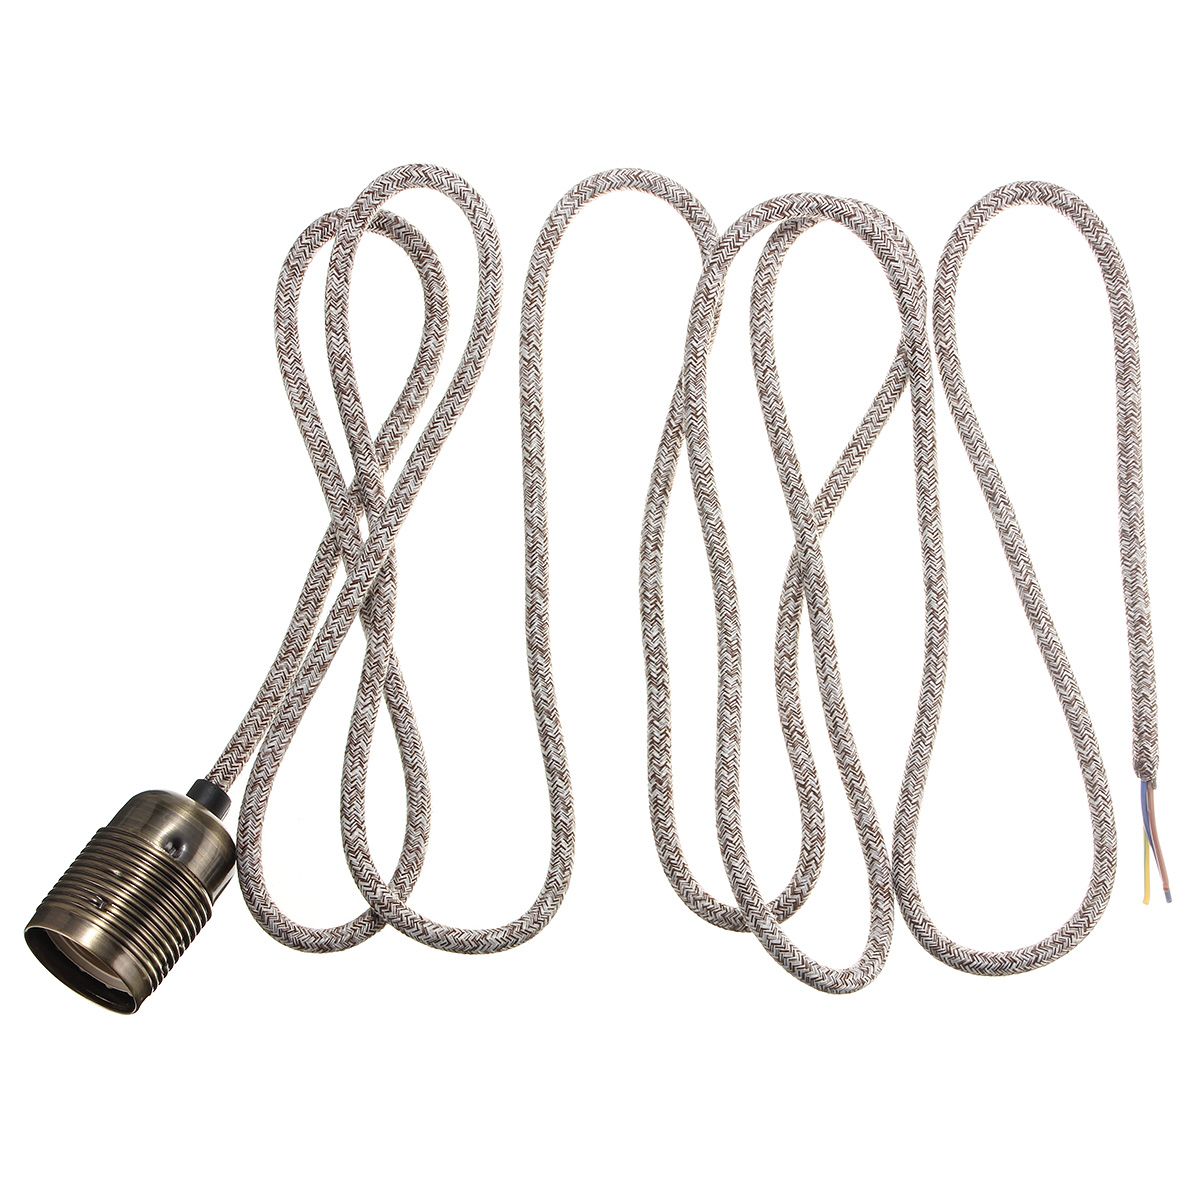 E27-3M-Wire-Vintage-Fabric-Flex-Cable-Pendant-Light-Bulb-Adapter-Lamp-Holder-Socket-1428709